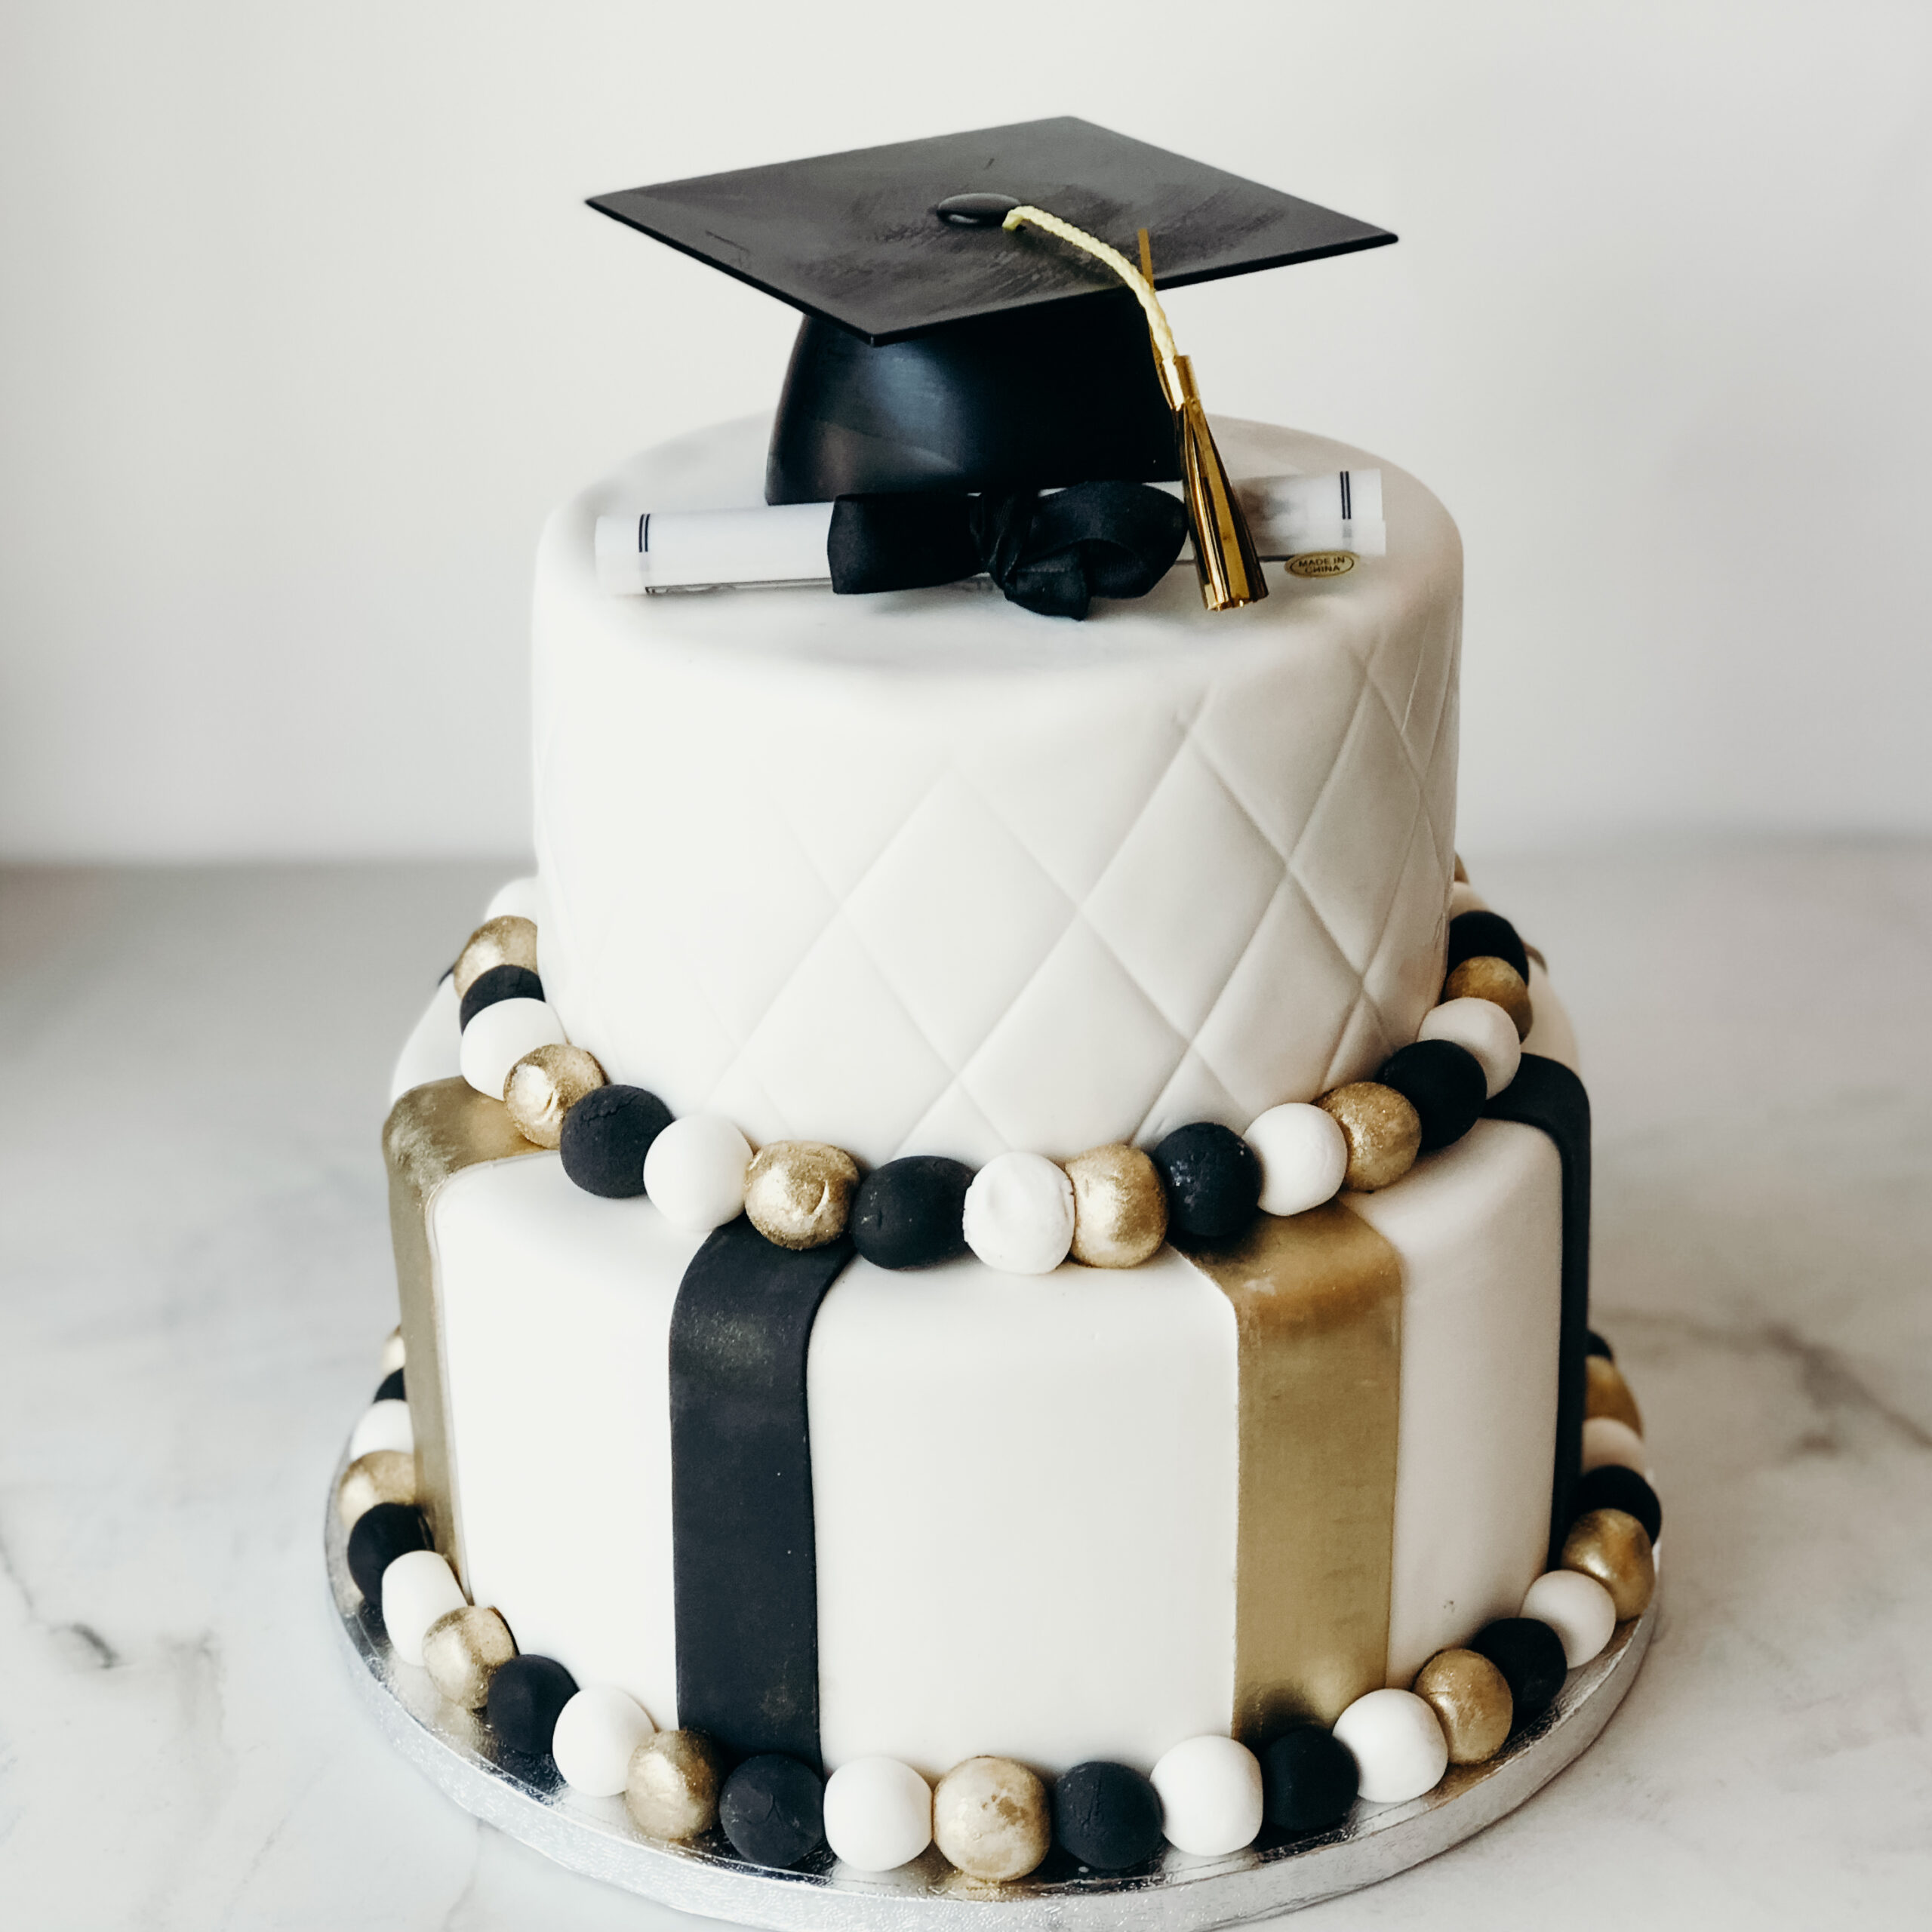 2022 graduation cakes